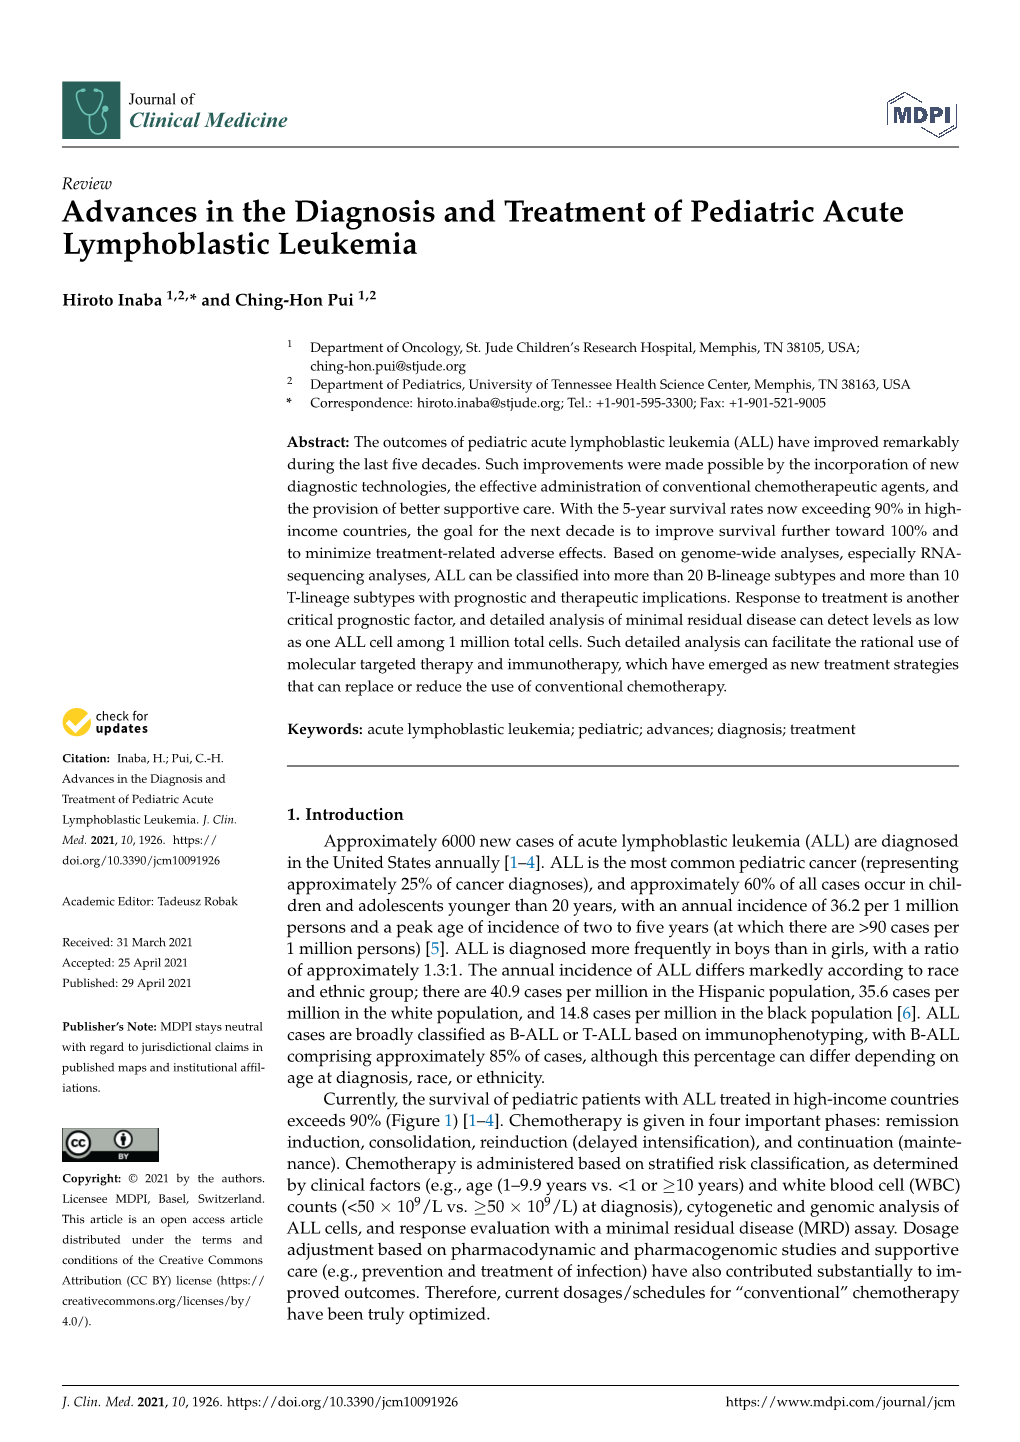 Advances in the Diagnosis and Treatment of Pediatric Acute Lymphoblastic Leukemia